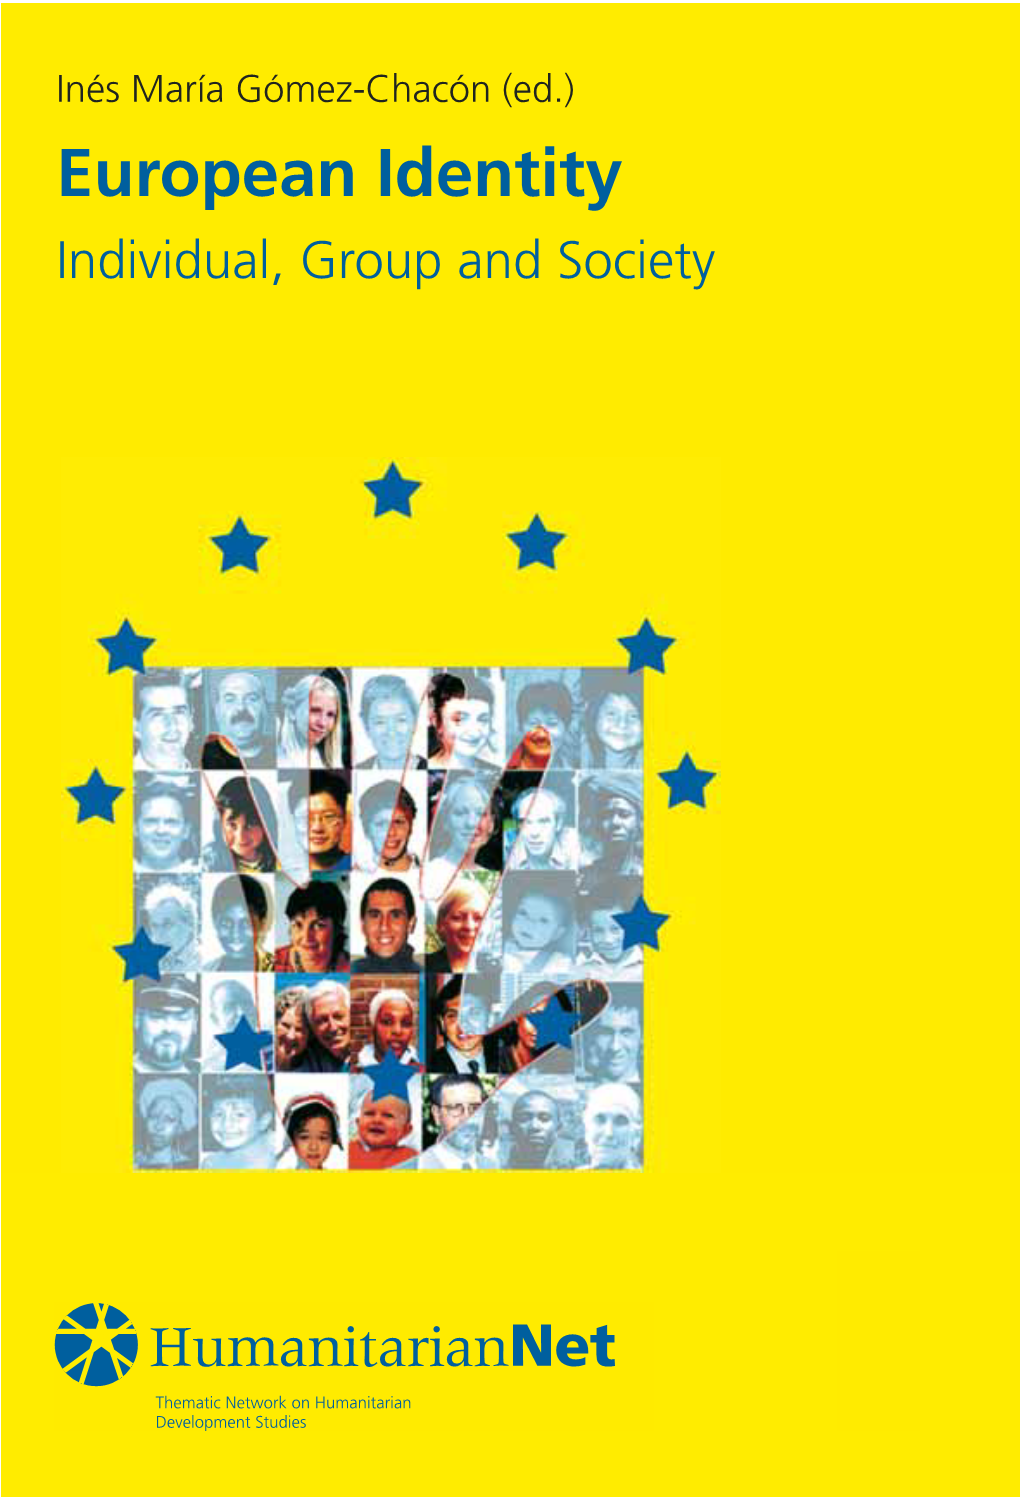 European Identity Individual, Group and Society